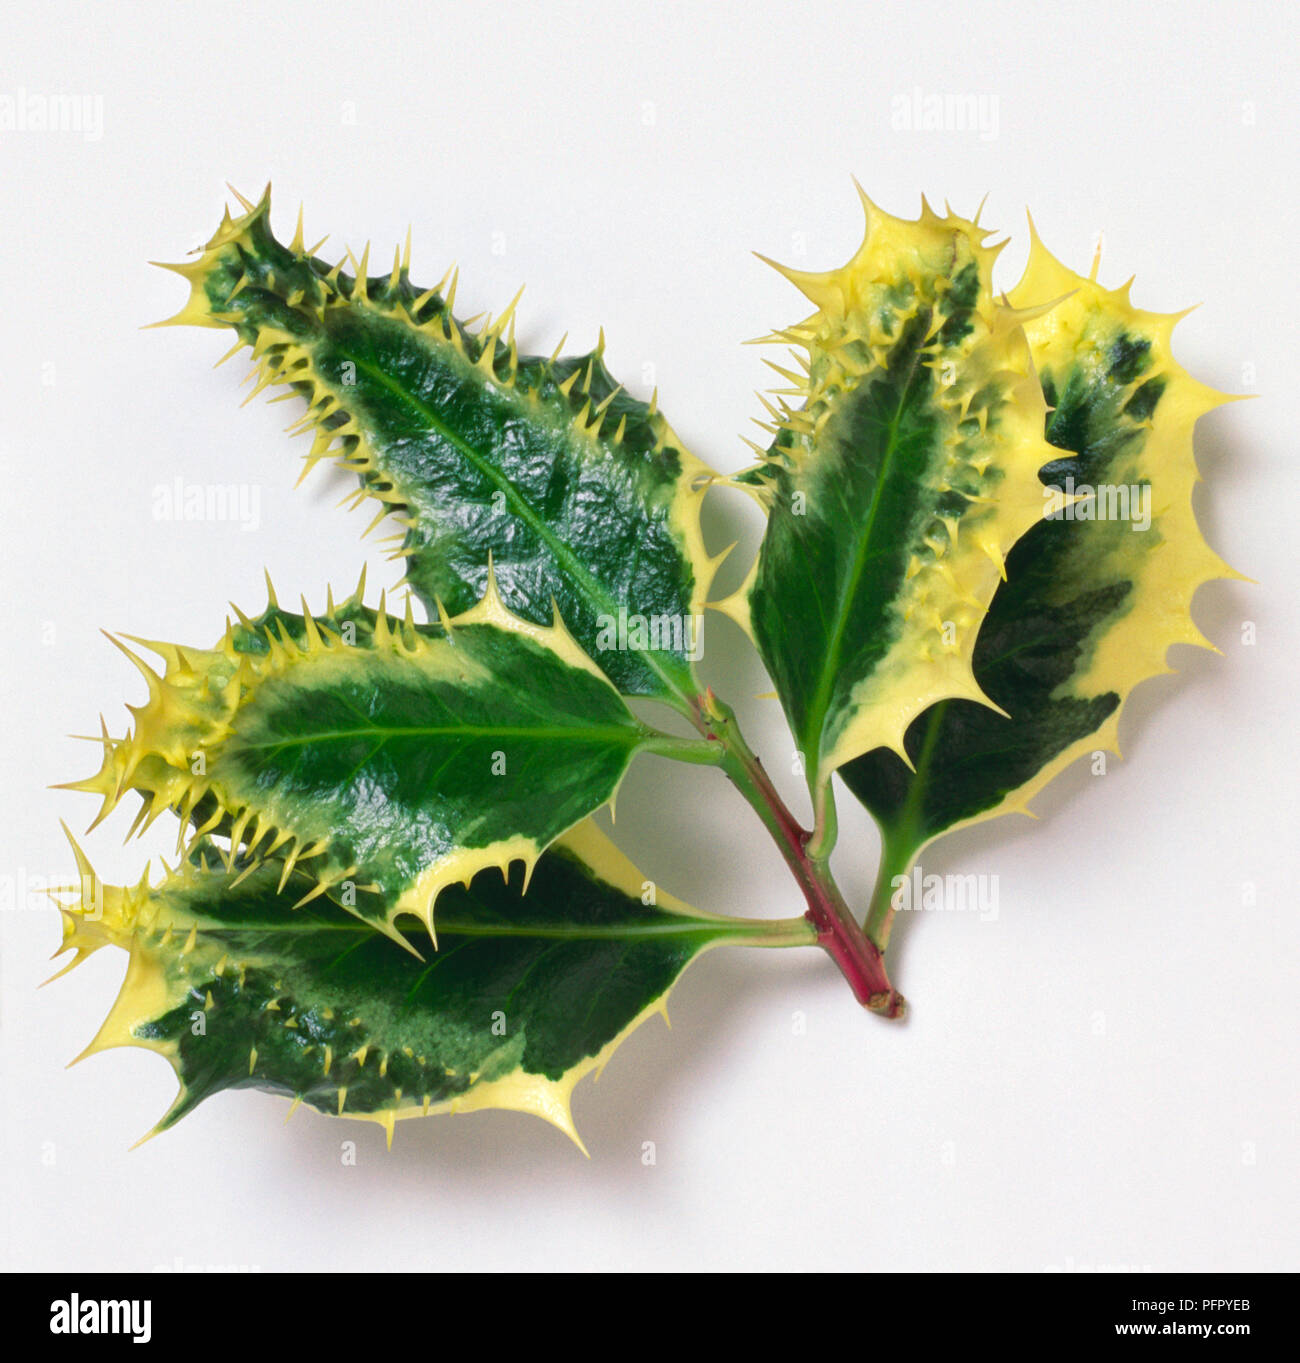 Ilex aquifolium 'Ferox Argentea' (Hedgehog holly), stem with spiny, variegated leaves Stock Photo